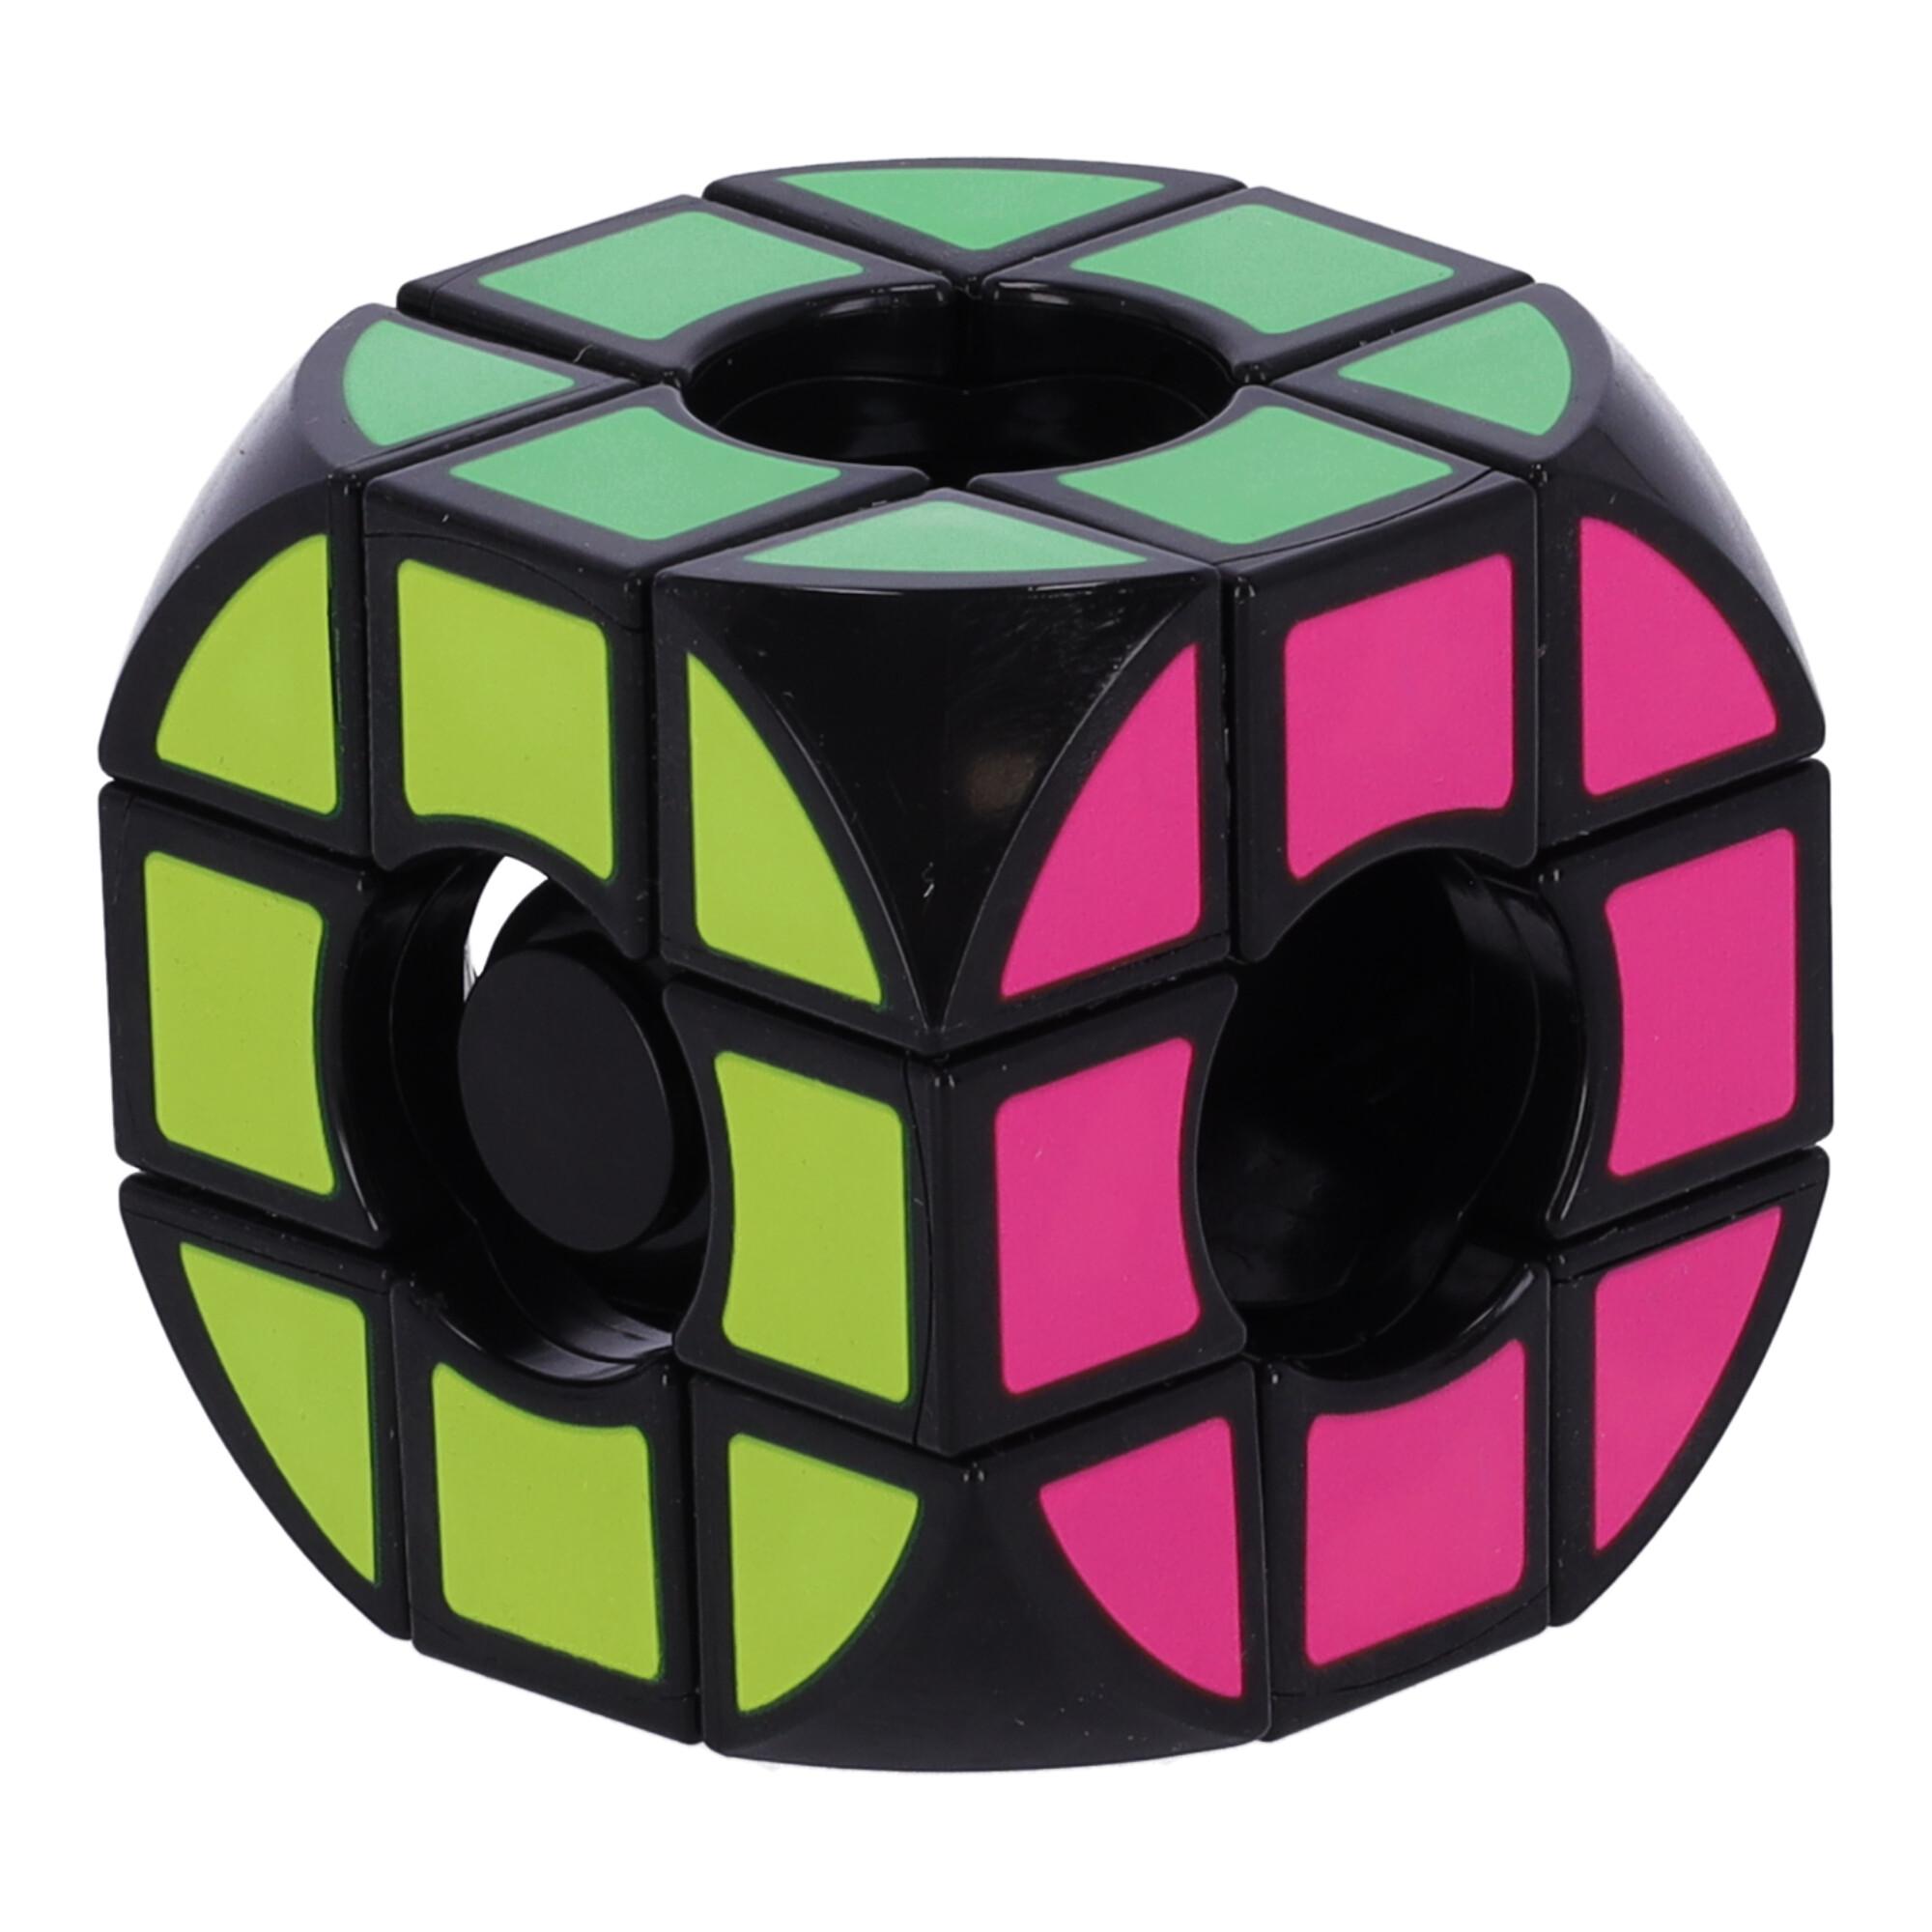 Modern jigsaw puzzle, logic cube, Rubik's Cube - Void, type I